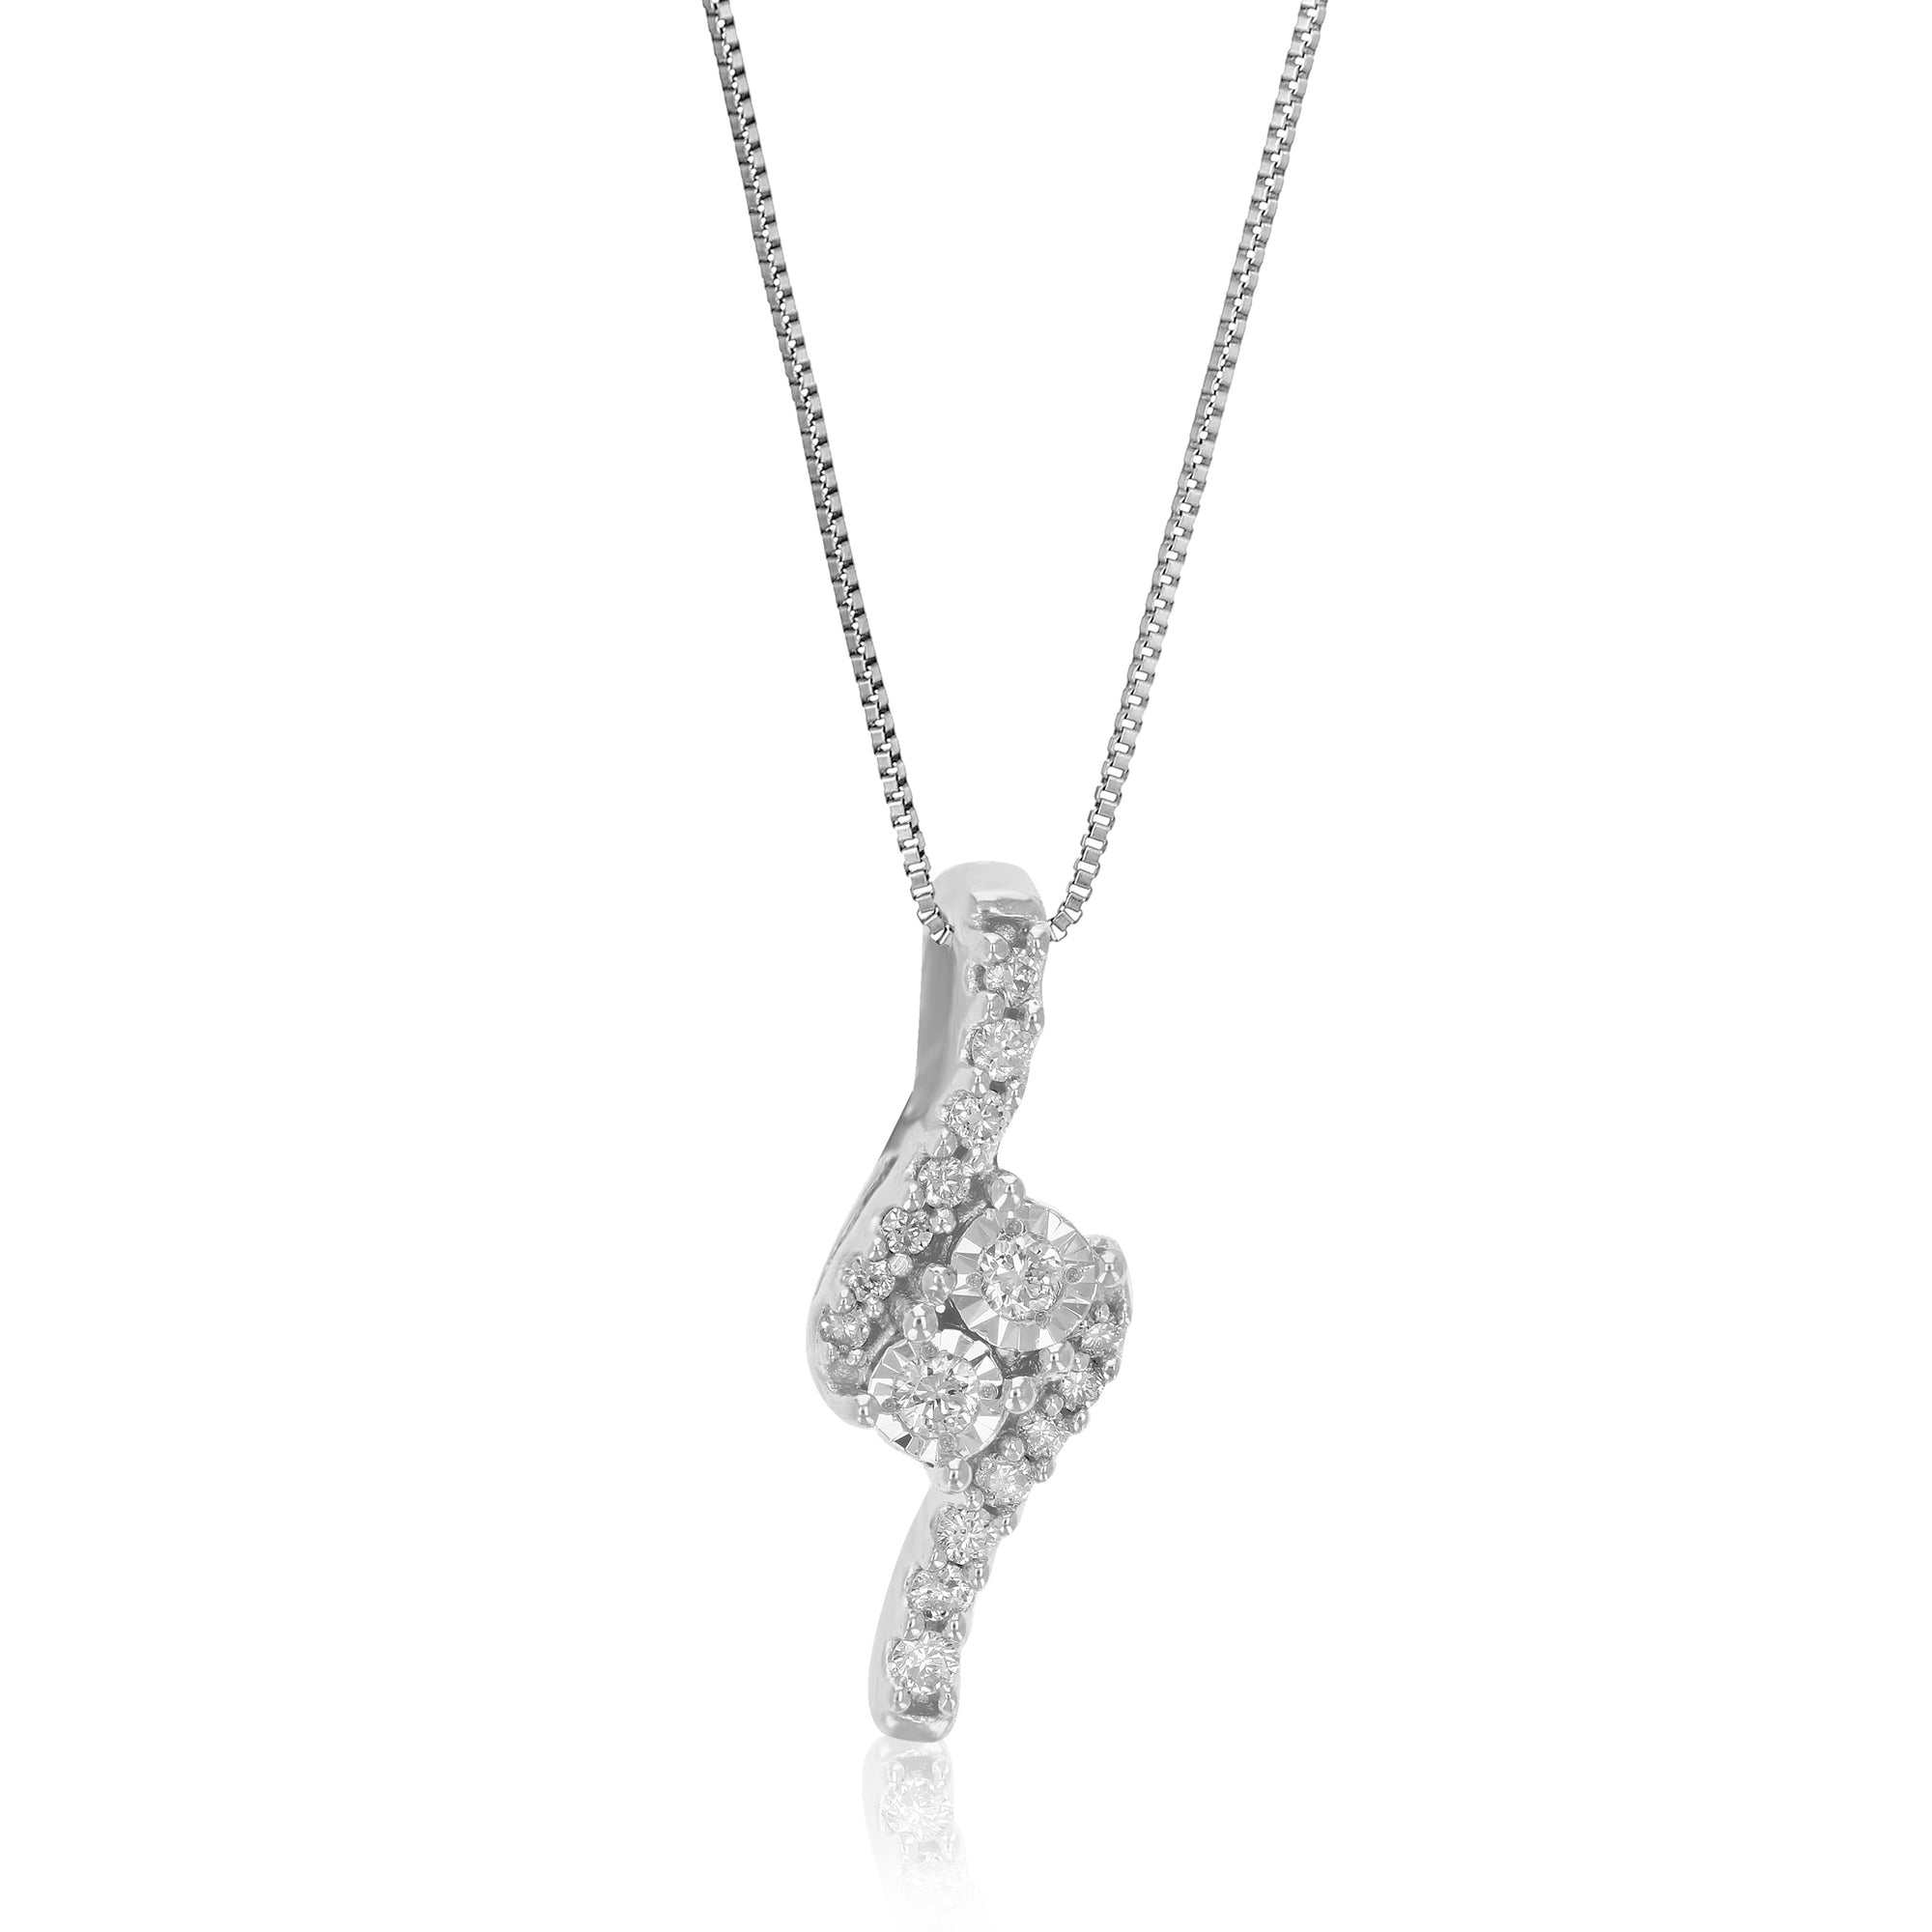 1/10 cttw Diamond Pendant Necklace for Women, Lab Grown Diamond Pendant Necklace in .925 Sterling Silver with Chain, Size 2/3 Inch